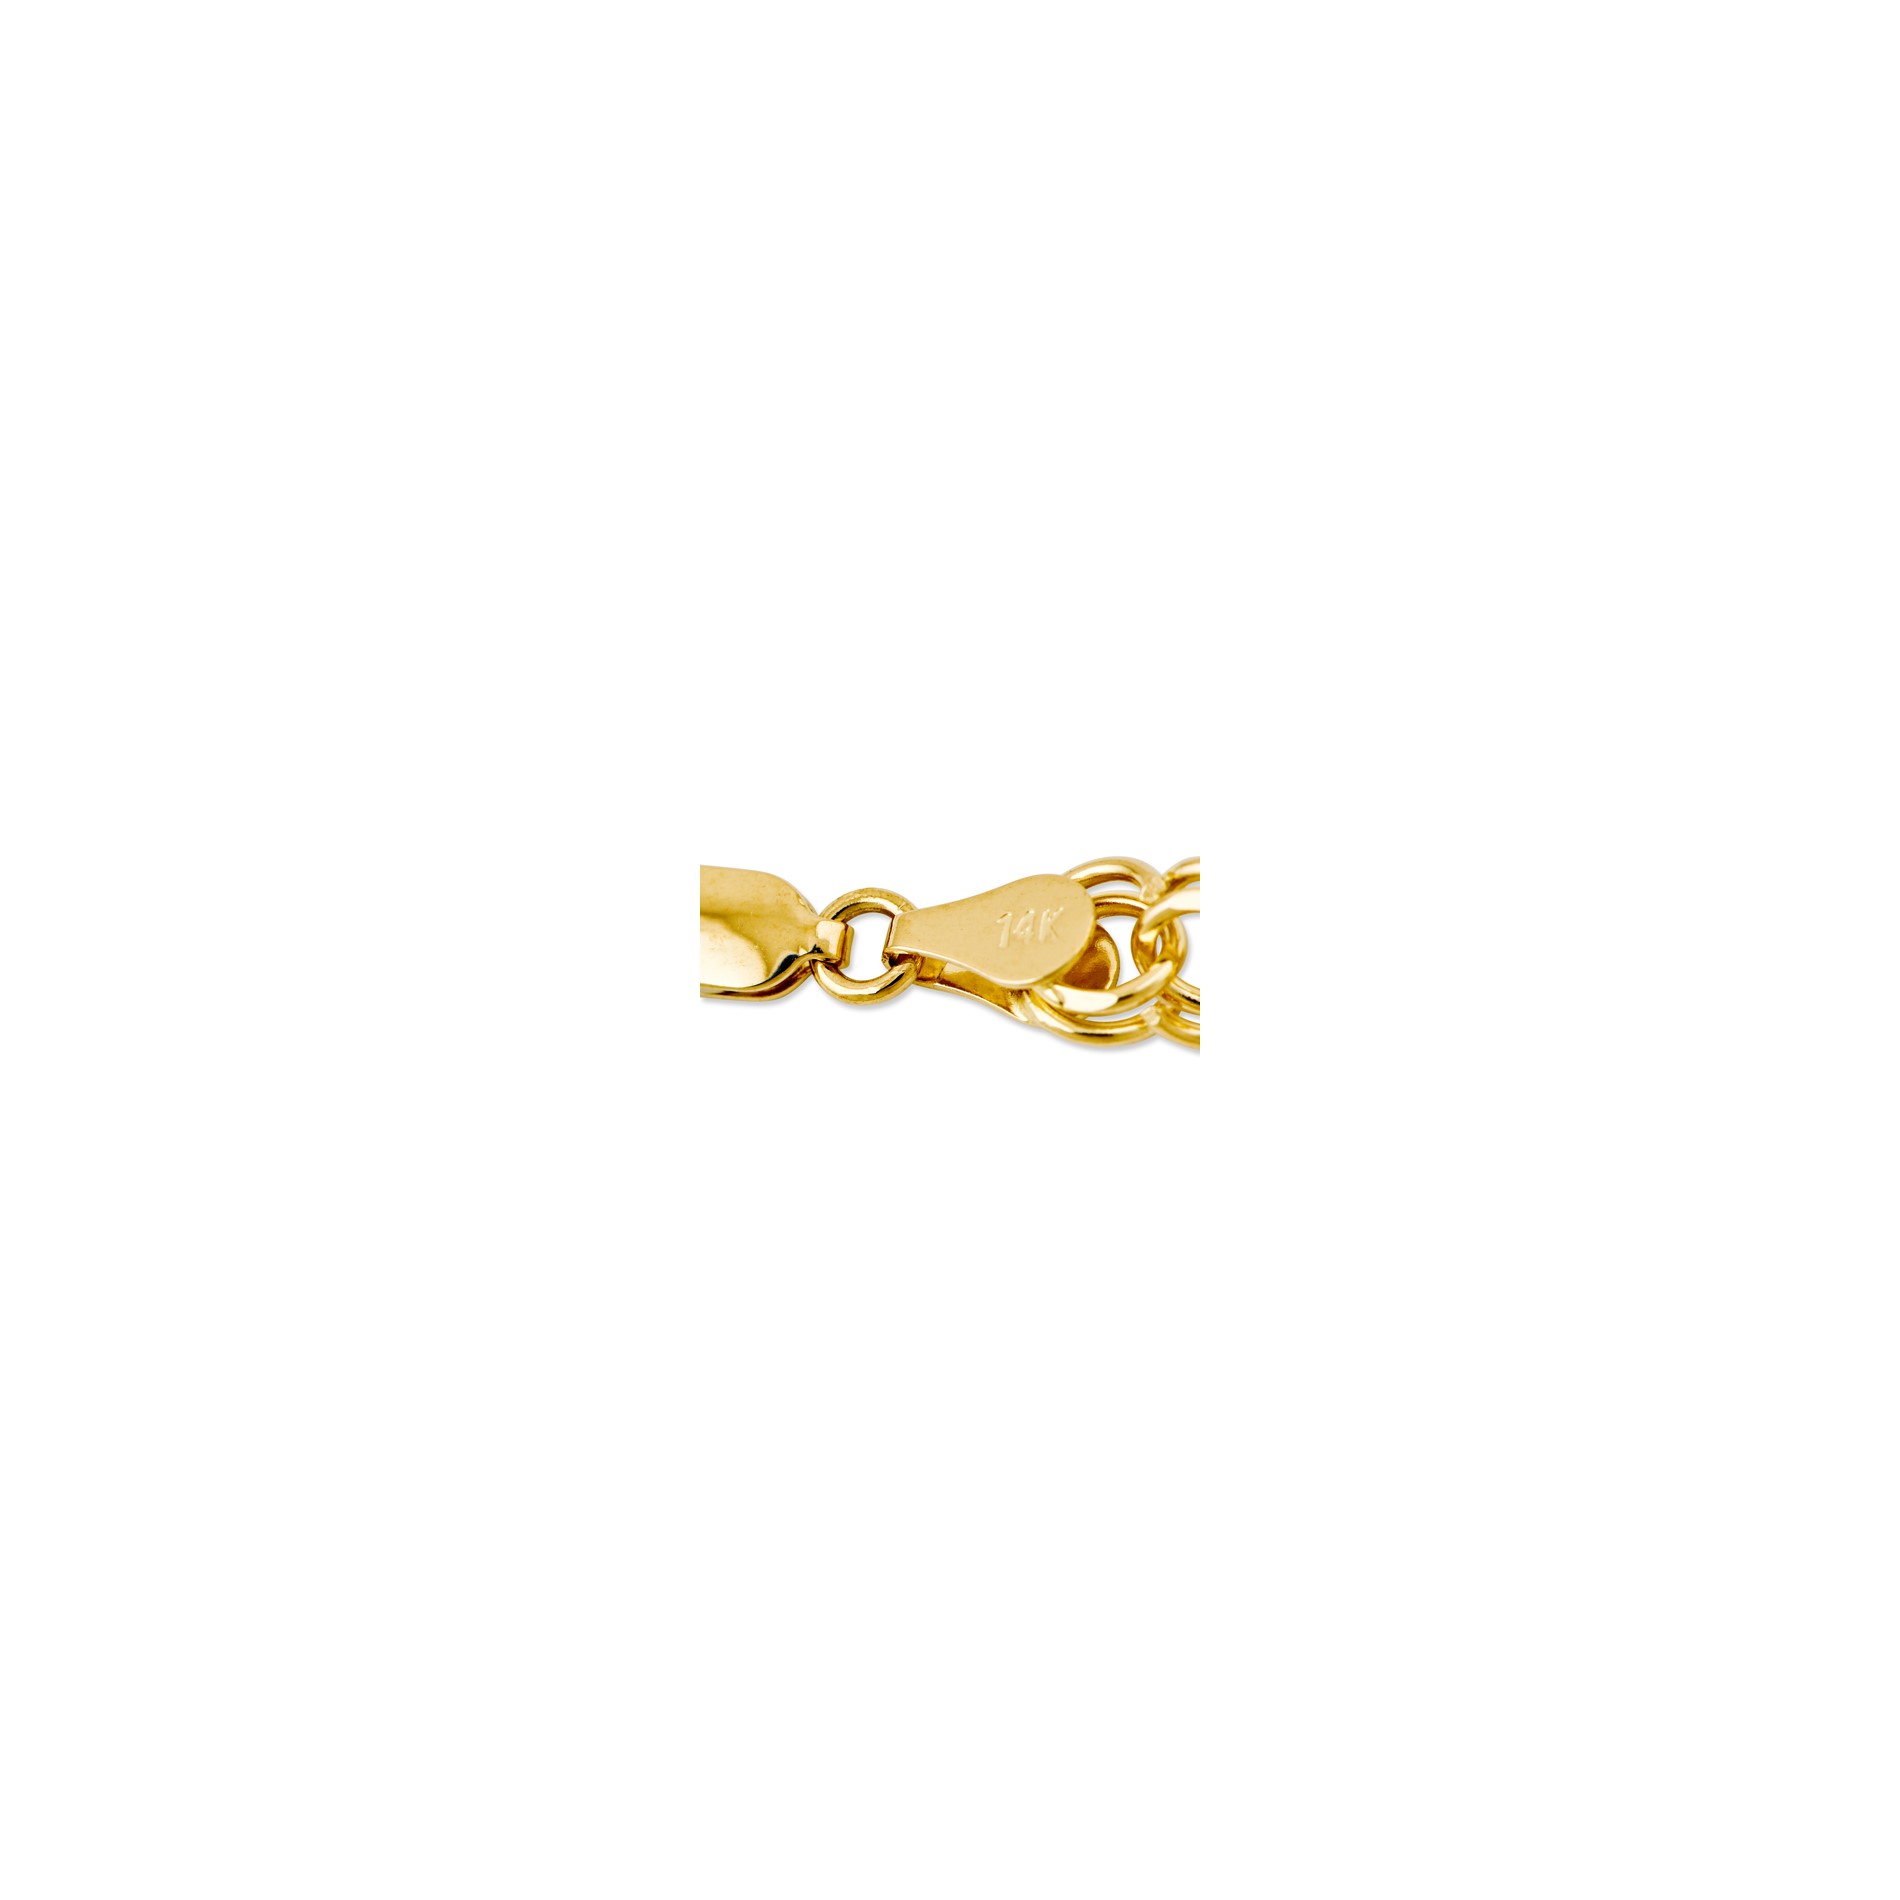 Diamond2Deal 14k Yellow Gold Double Link Charm Bracelet 7 inch for women